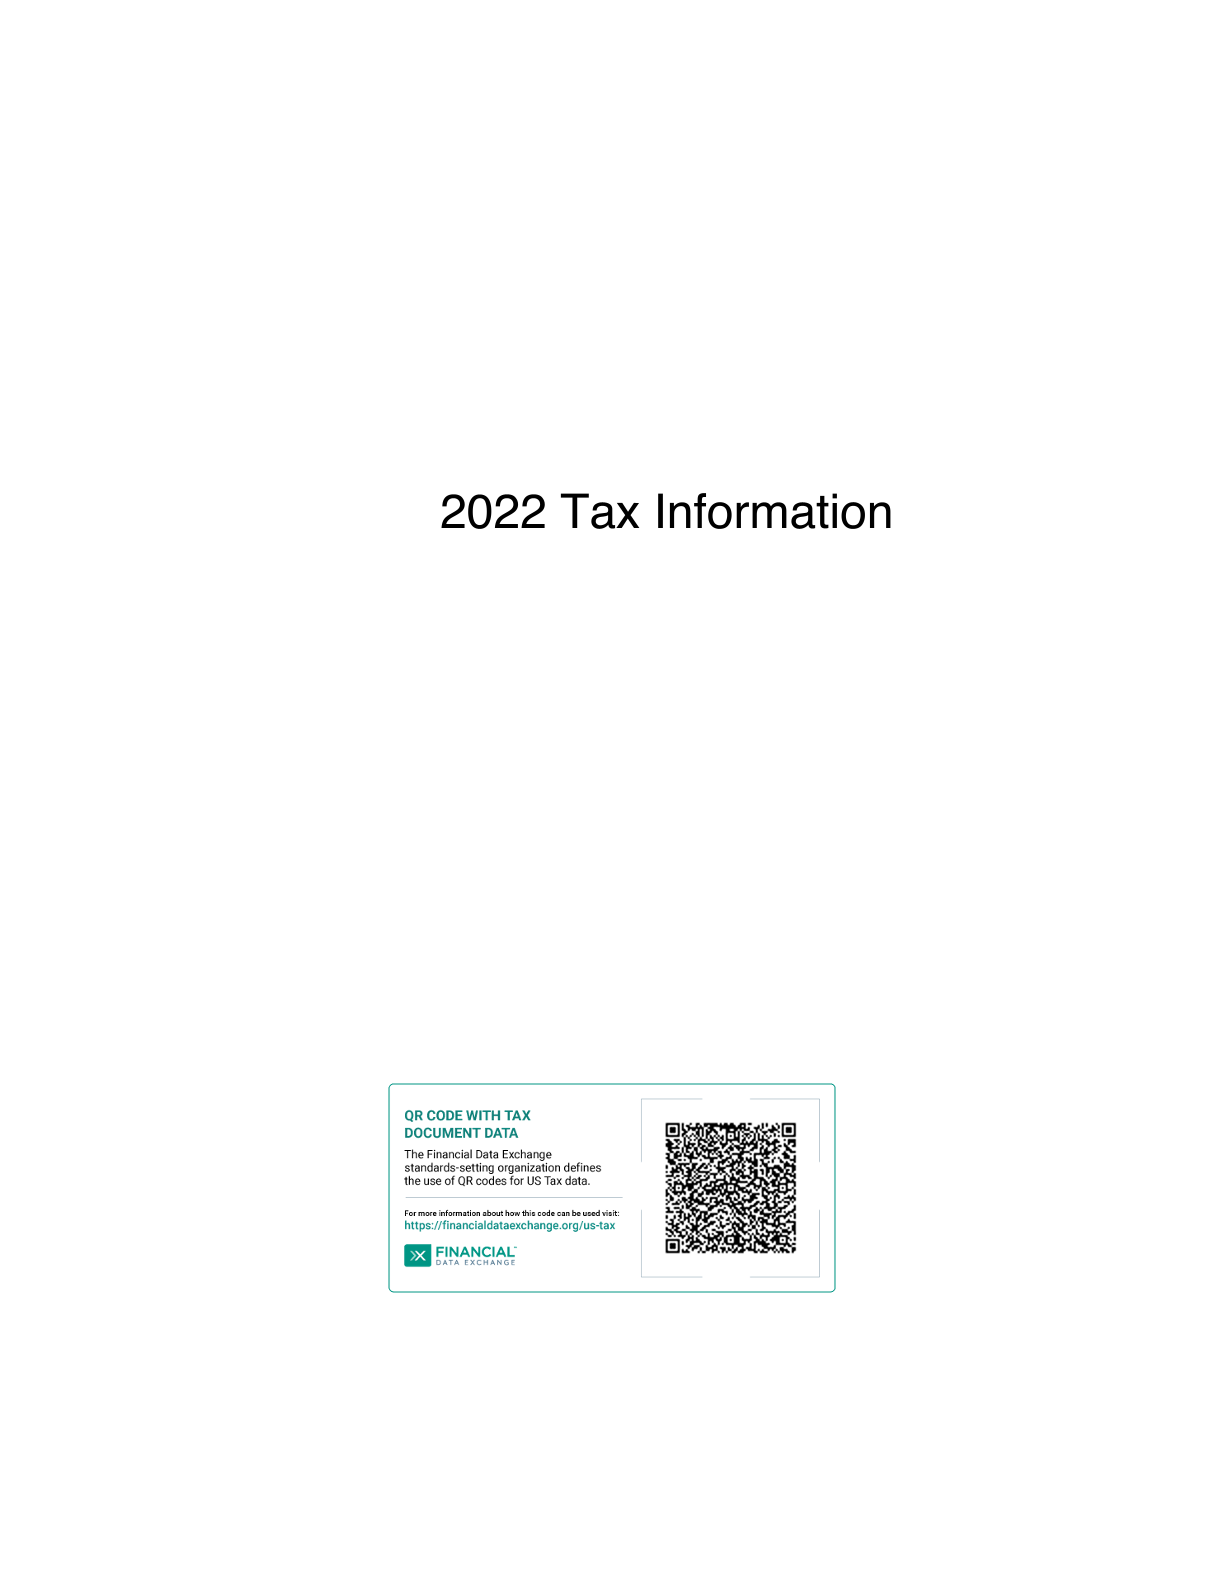 /img/forms/Tax1095A/2022/v5.0/Tax1095A.RecipCopy.qr.png